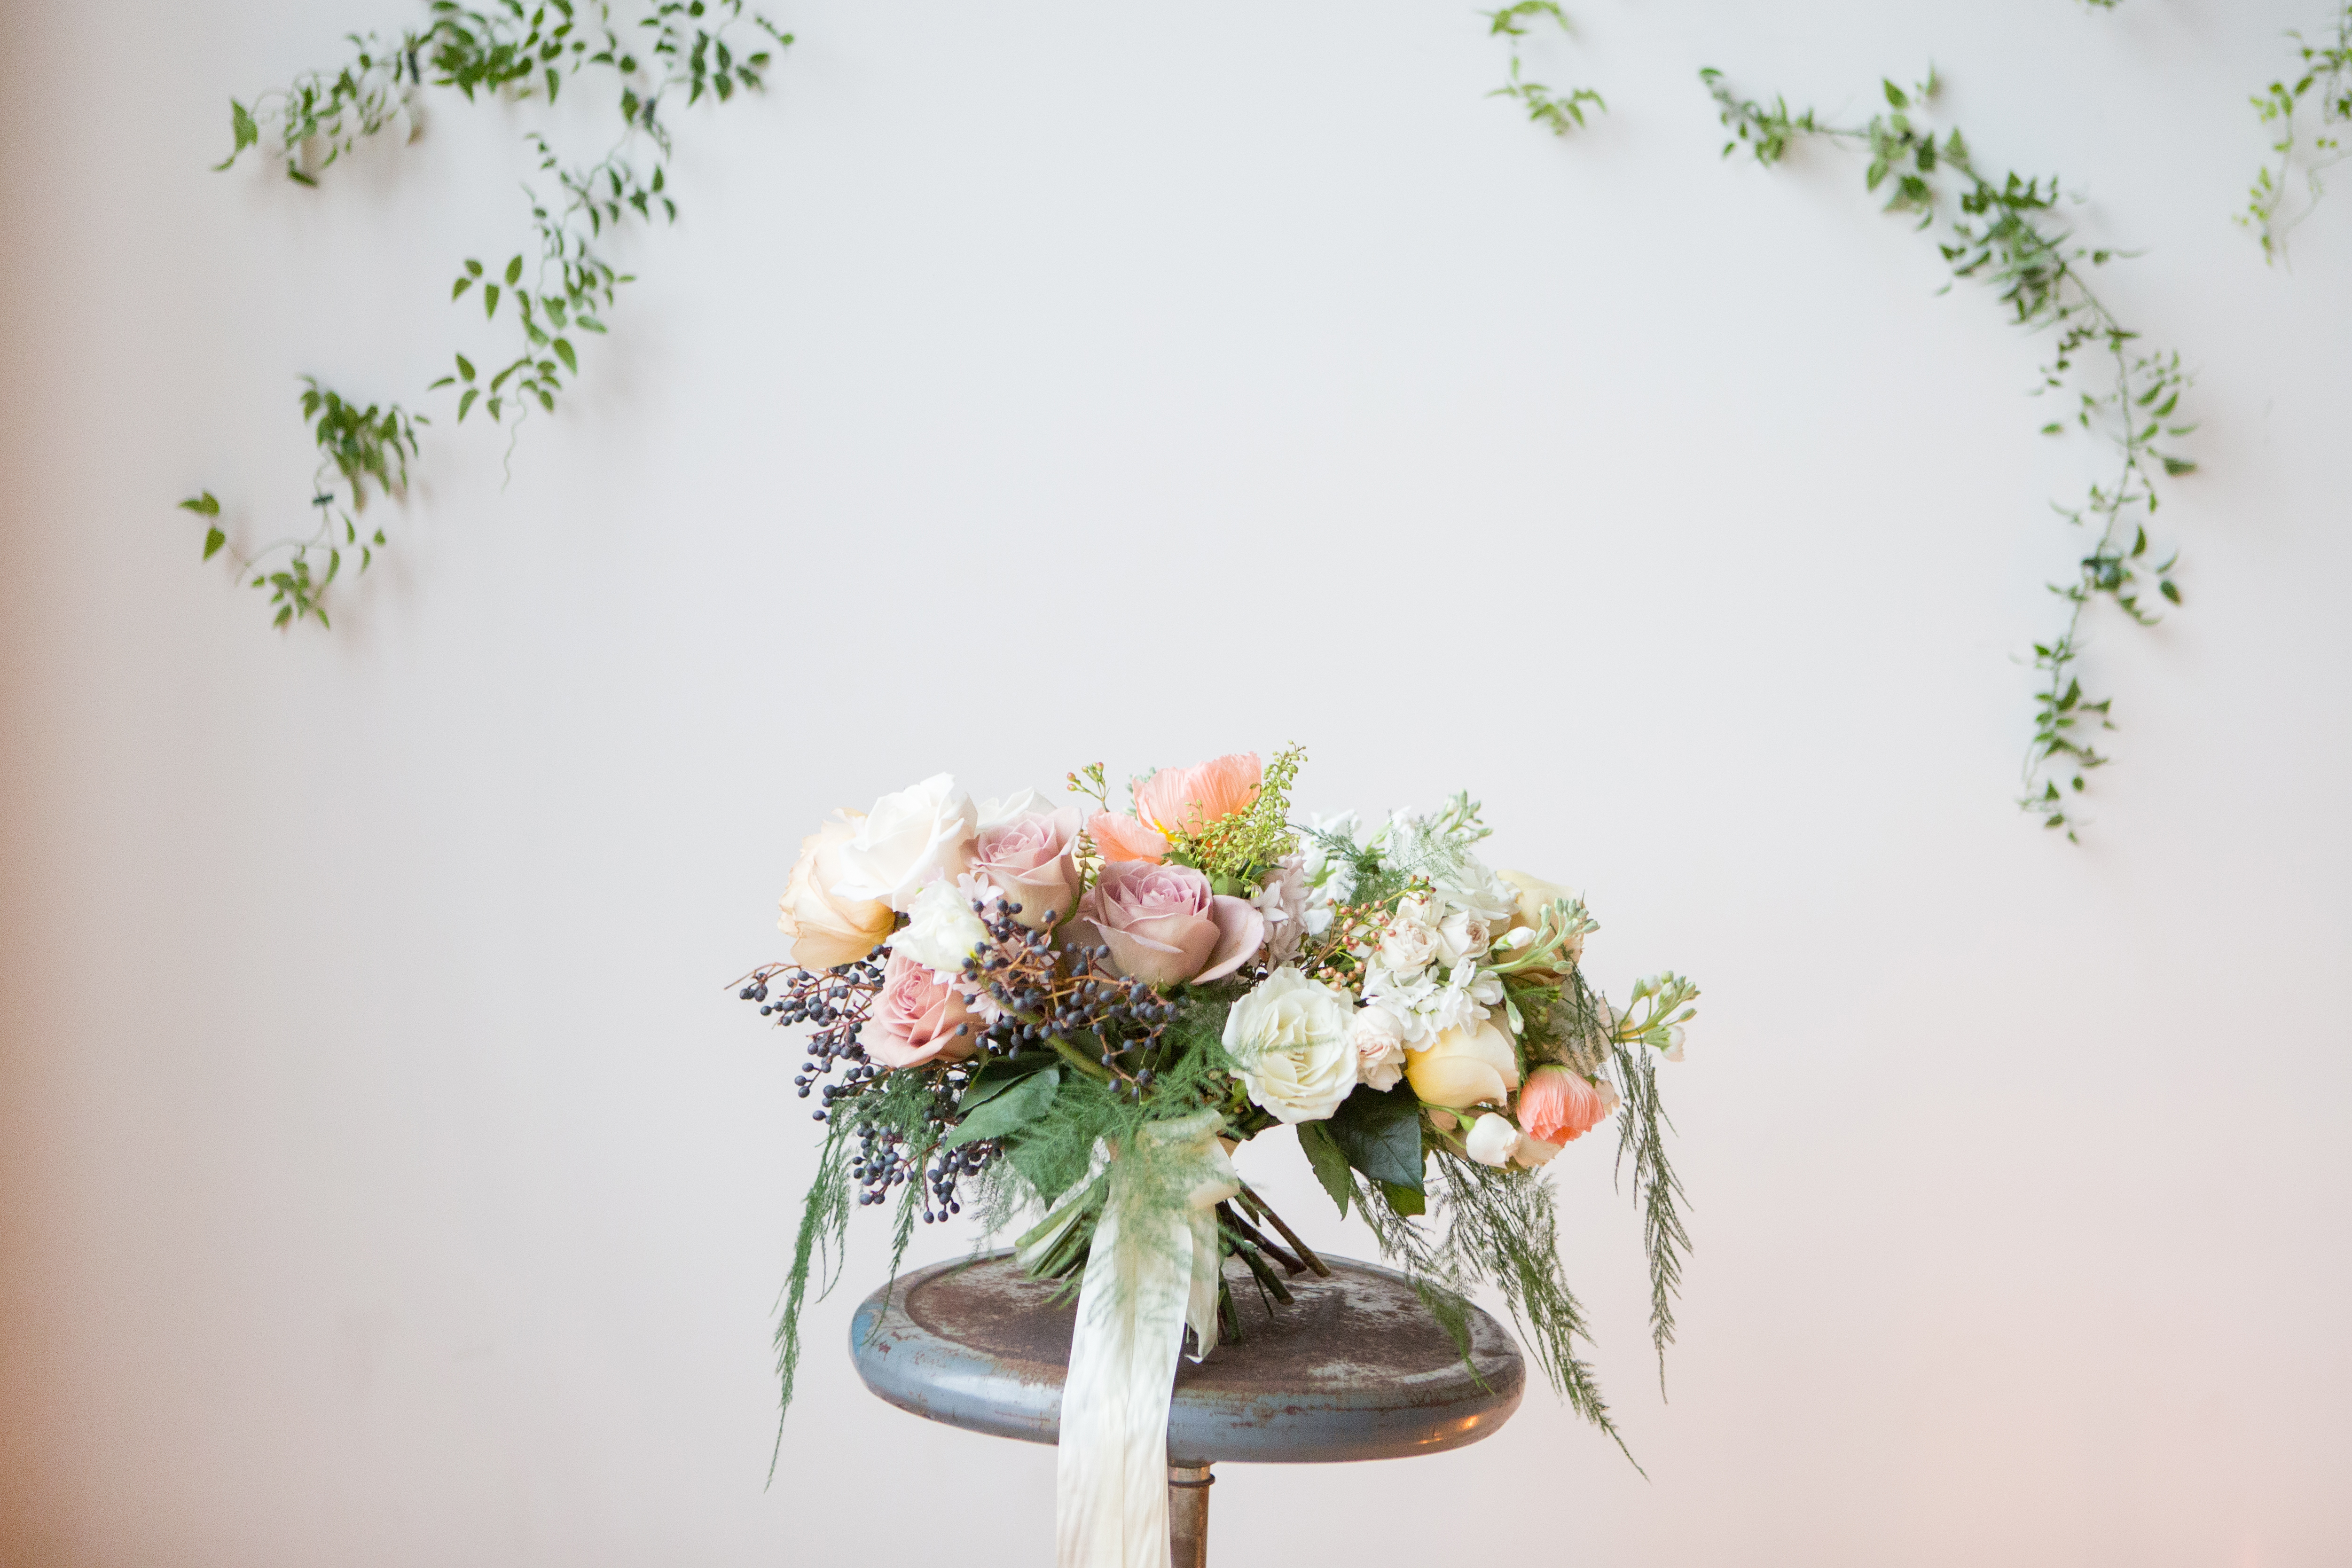 Winter Wedding Bouquet | The Day's Design | Hetler Photography